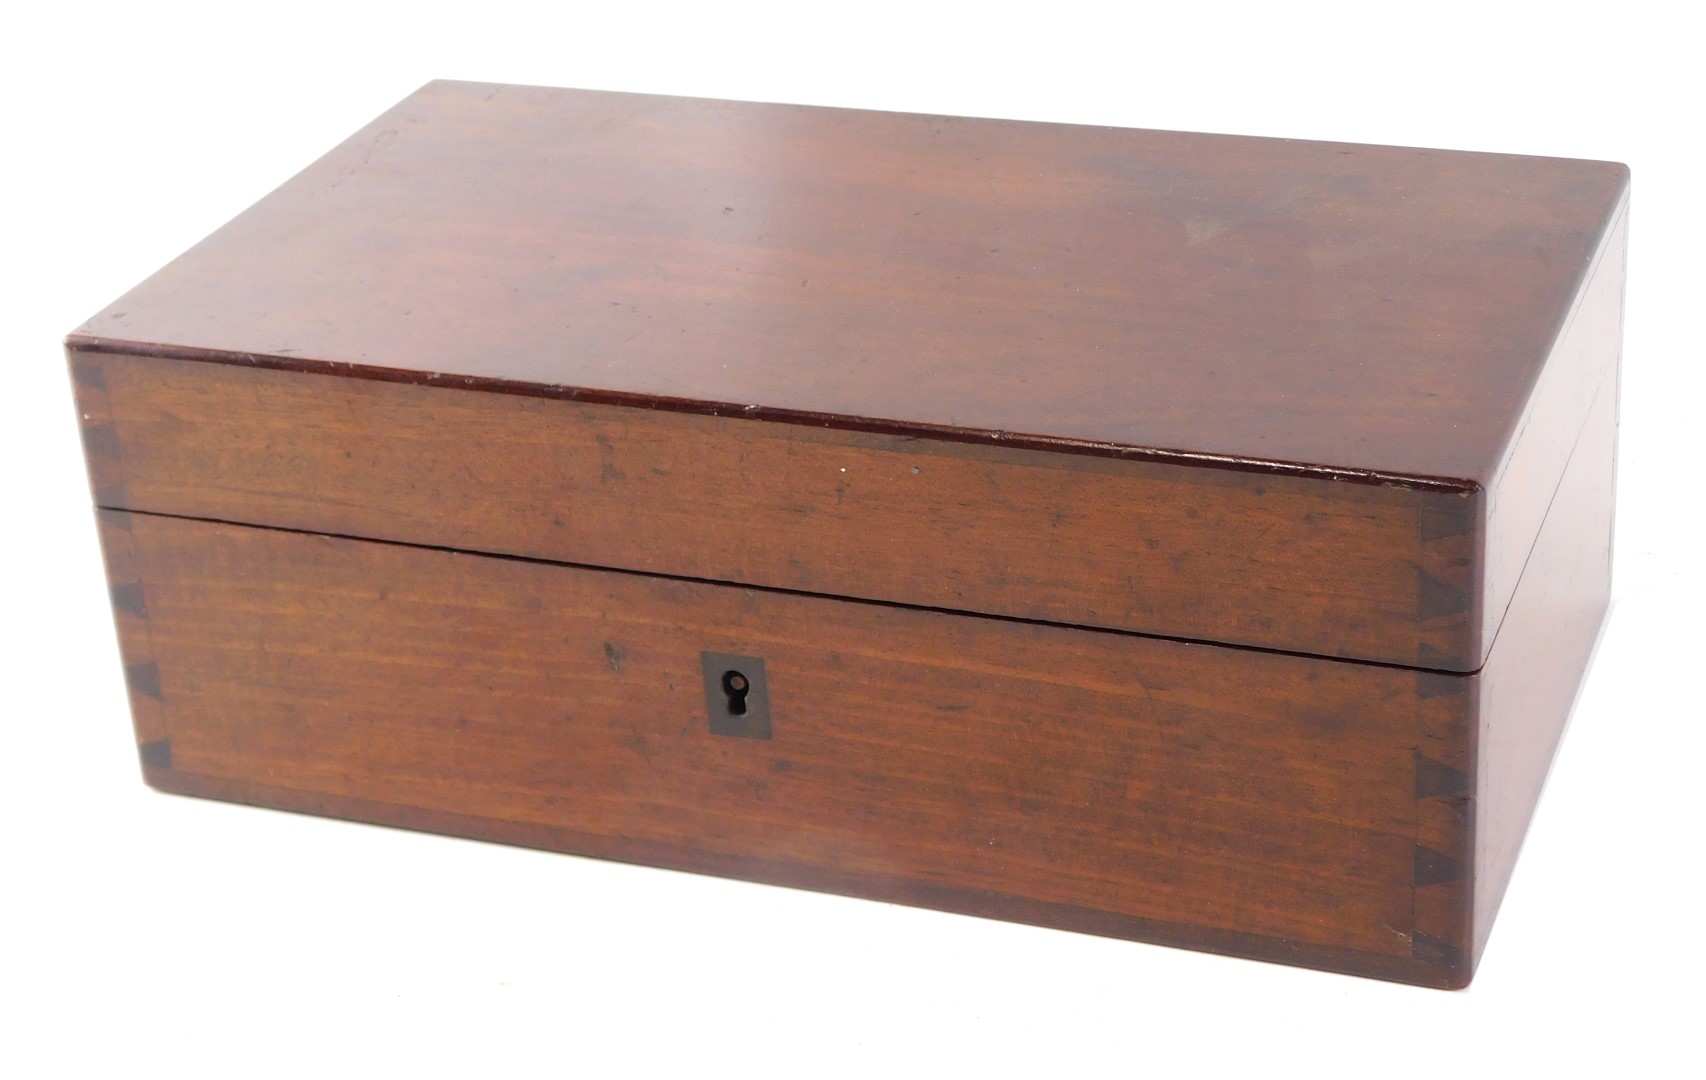 A 19thC mahogany jewellery box, with brass lock plate, 11cm high, 27cm wide, 16cm deep.